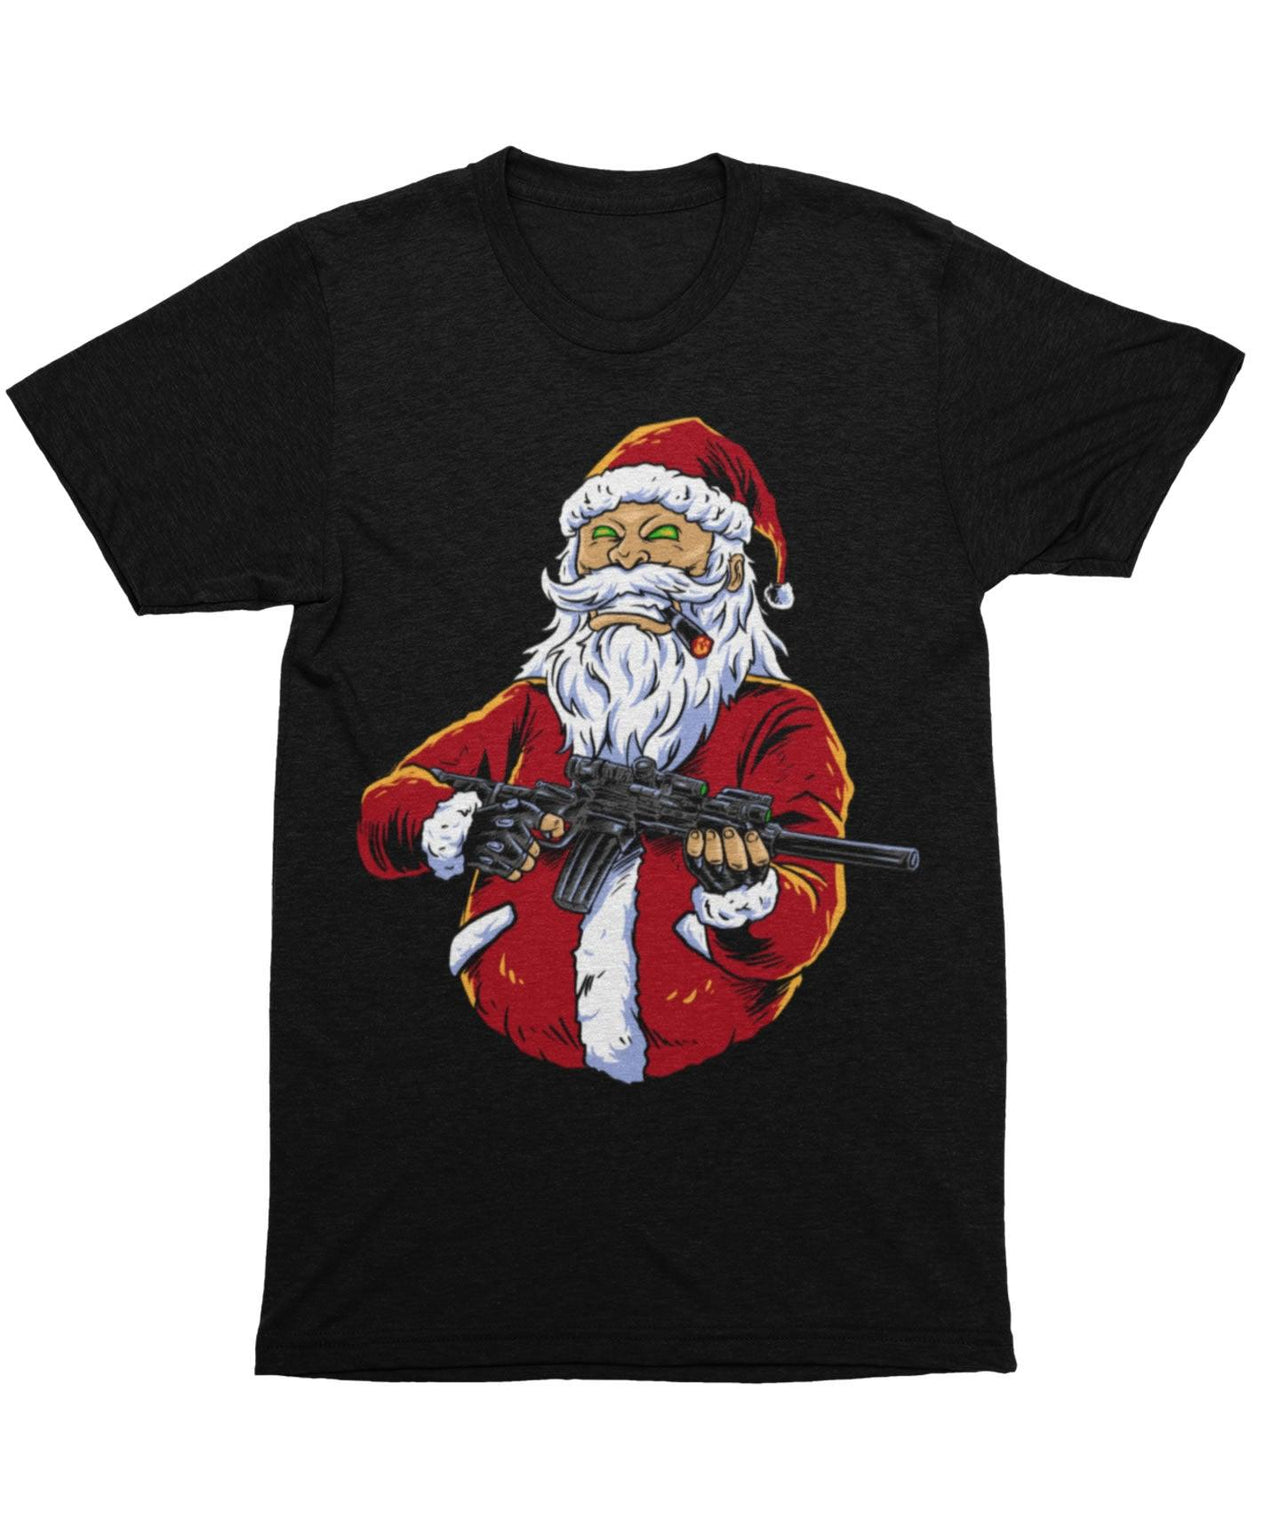 Santa Shoot Em All Unisex Christmas Mens T-Shirt 8Ball